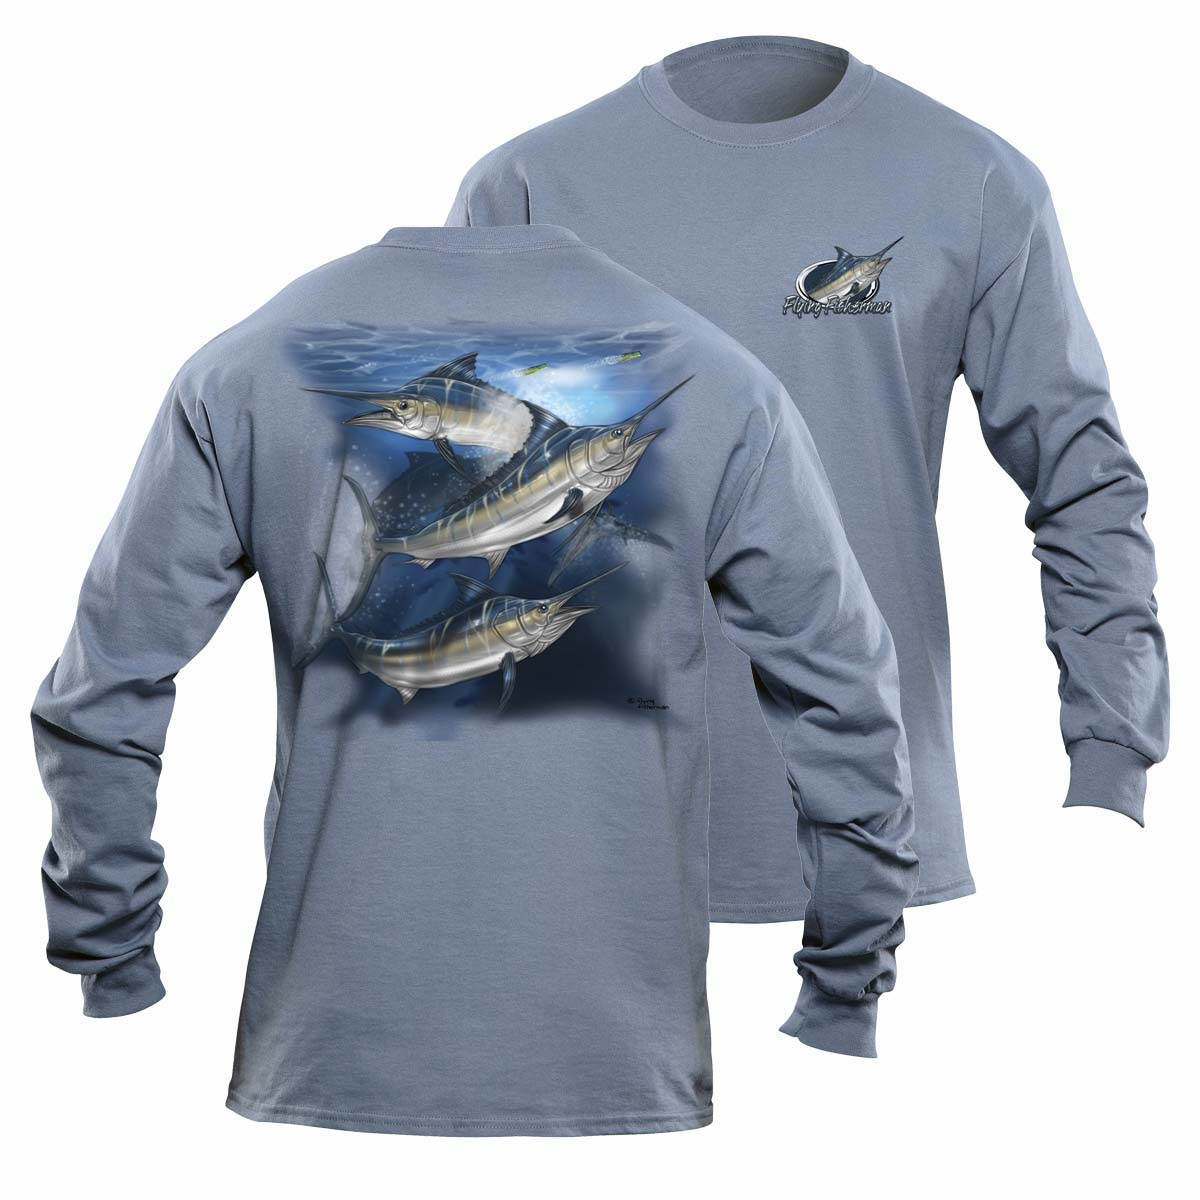 Flying Fisherman Tl1639Cxl Marlin Long Sleeved T-Shirt, Indigo Xlarge